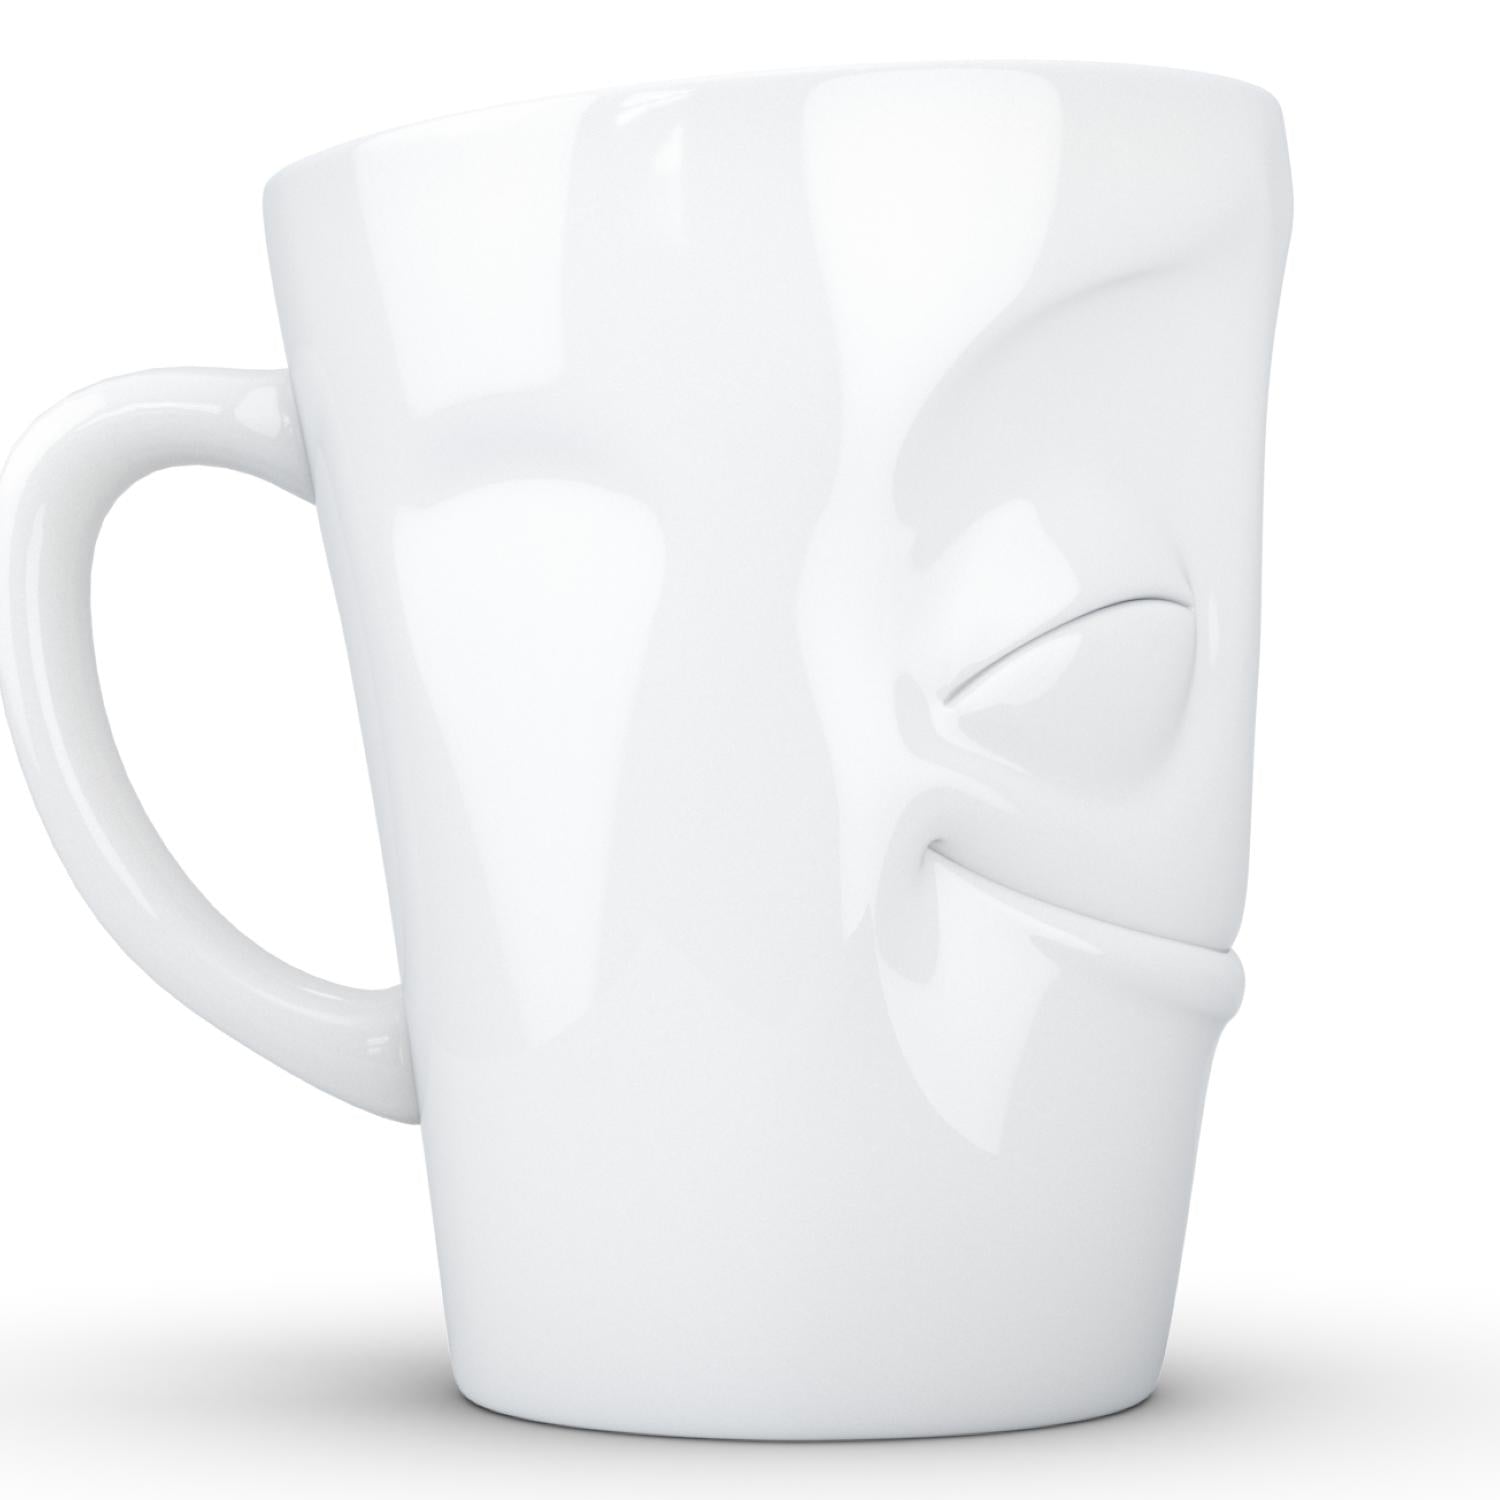 11 oz Hilo c-handle coffee mug - matte black out, White In [6700100] :  Splendids Dinnerware, Wholesale Dinnerware and Glassware for Restaurant and  Home